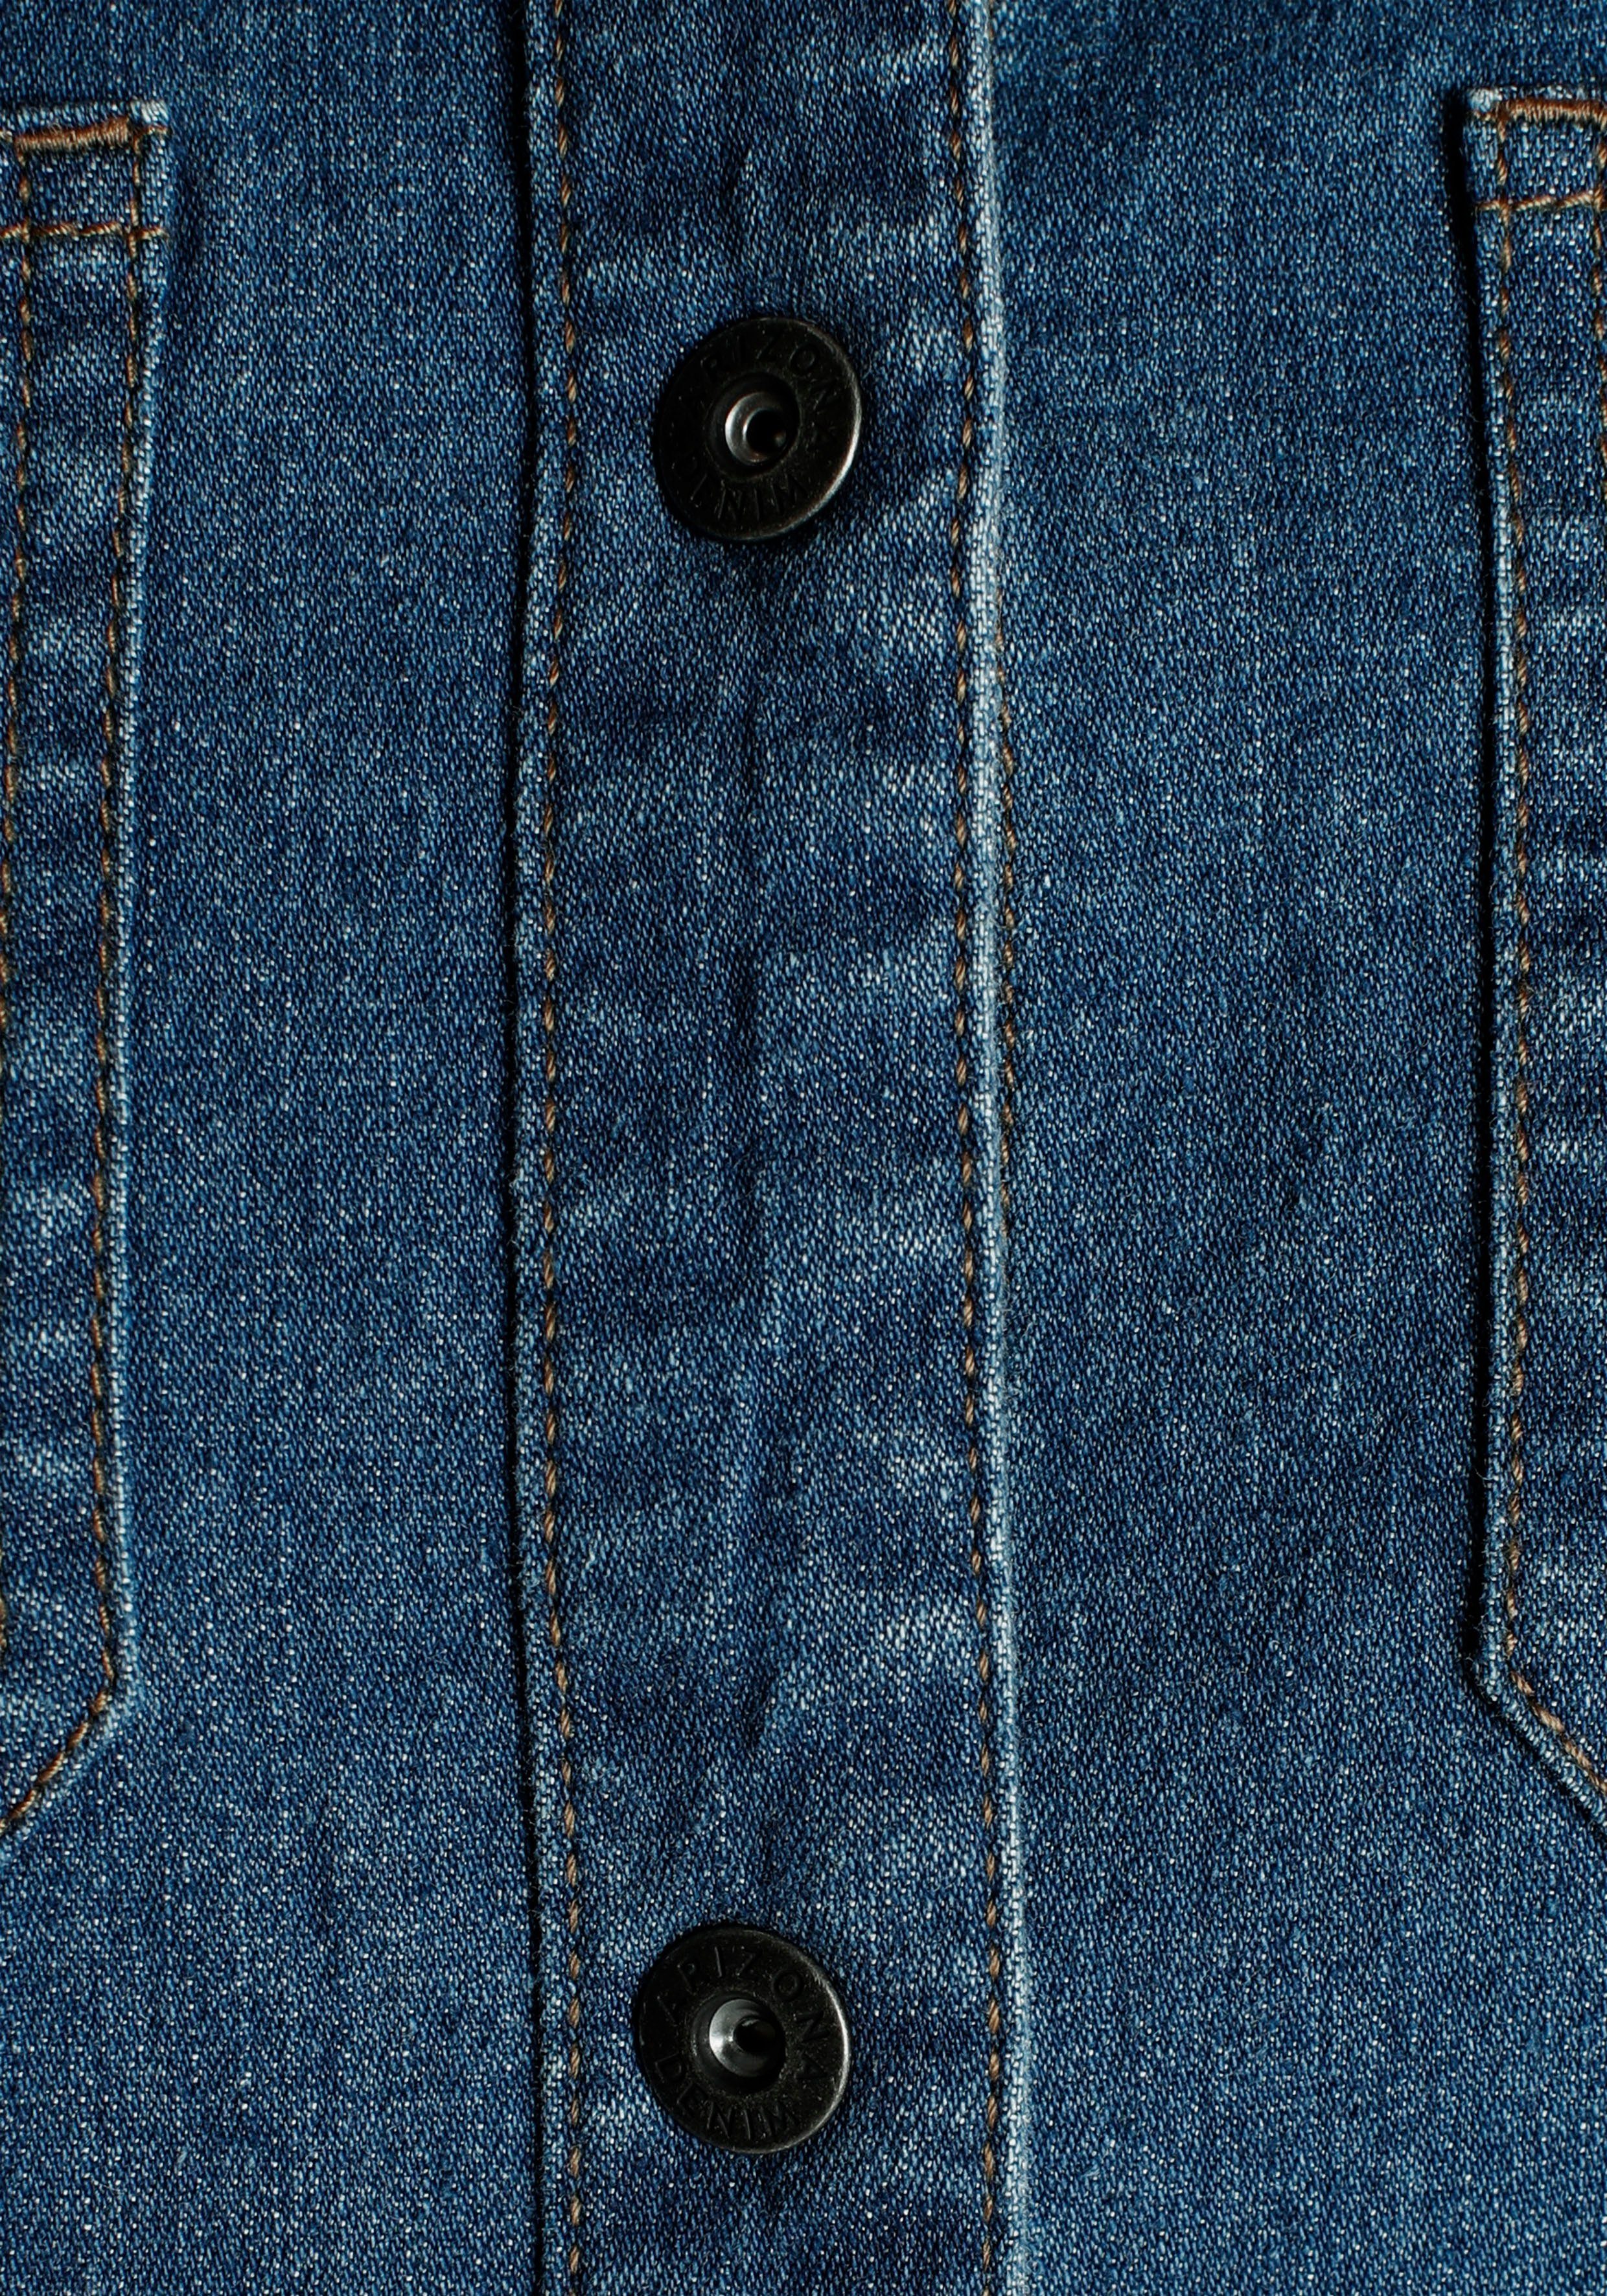 Arizona Jeansjacke - geschnitten Shacket Hemdjacke Denim dark used blue Weiter